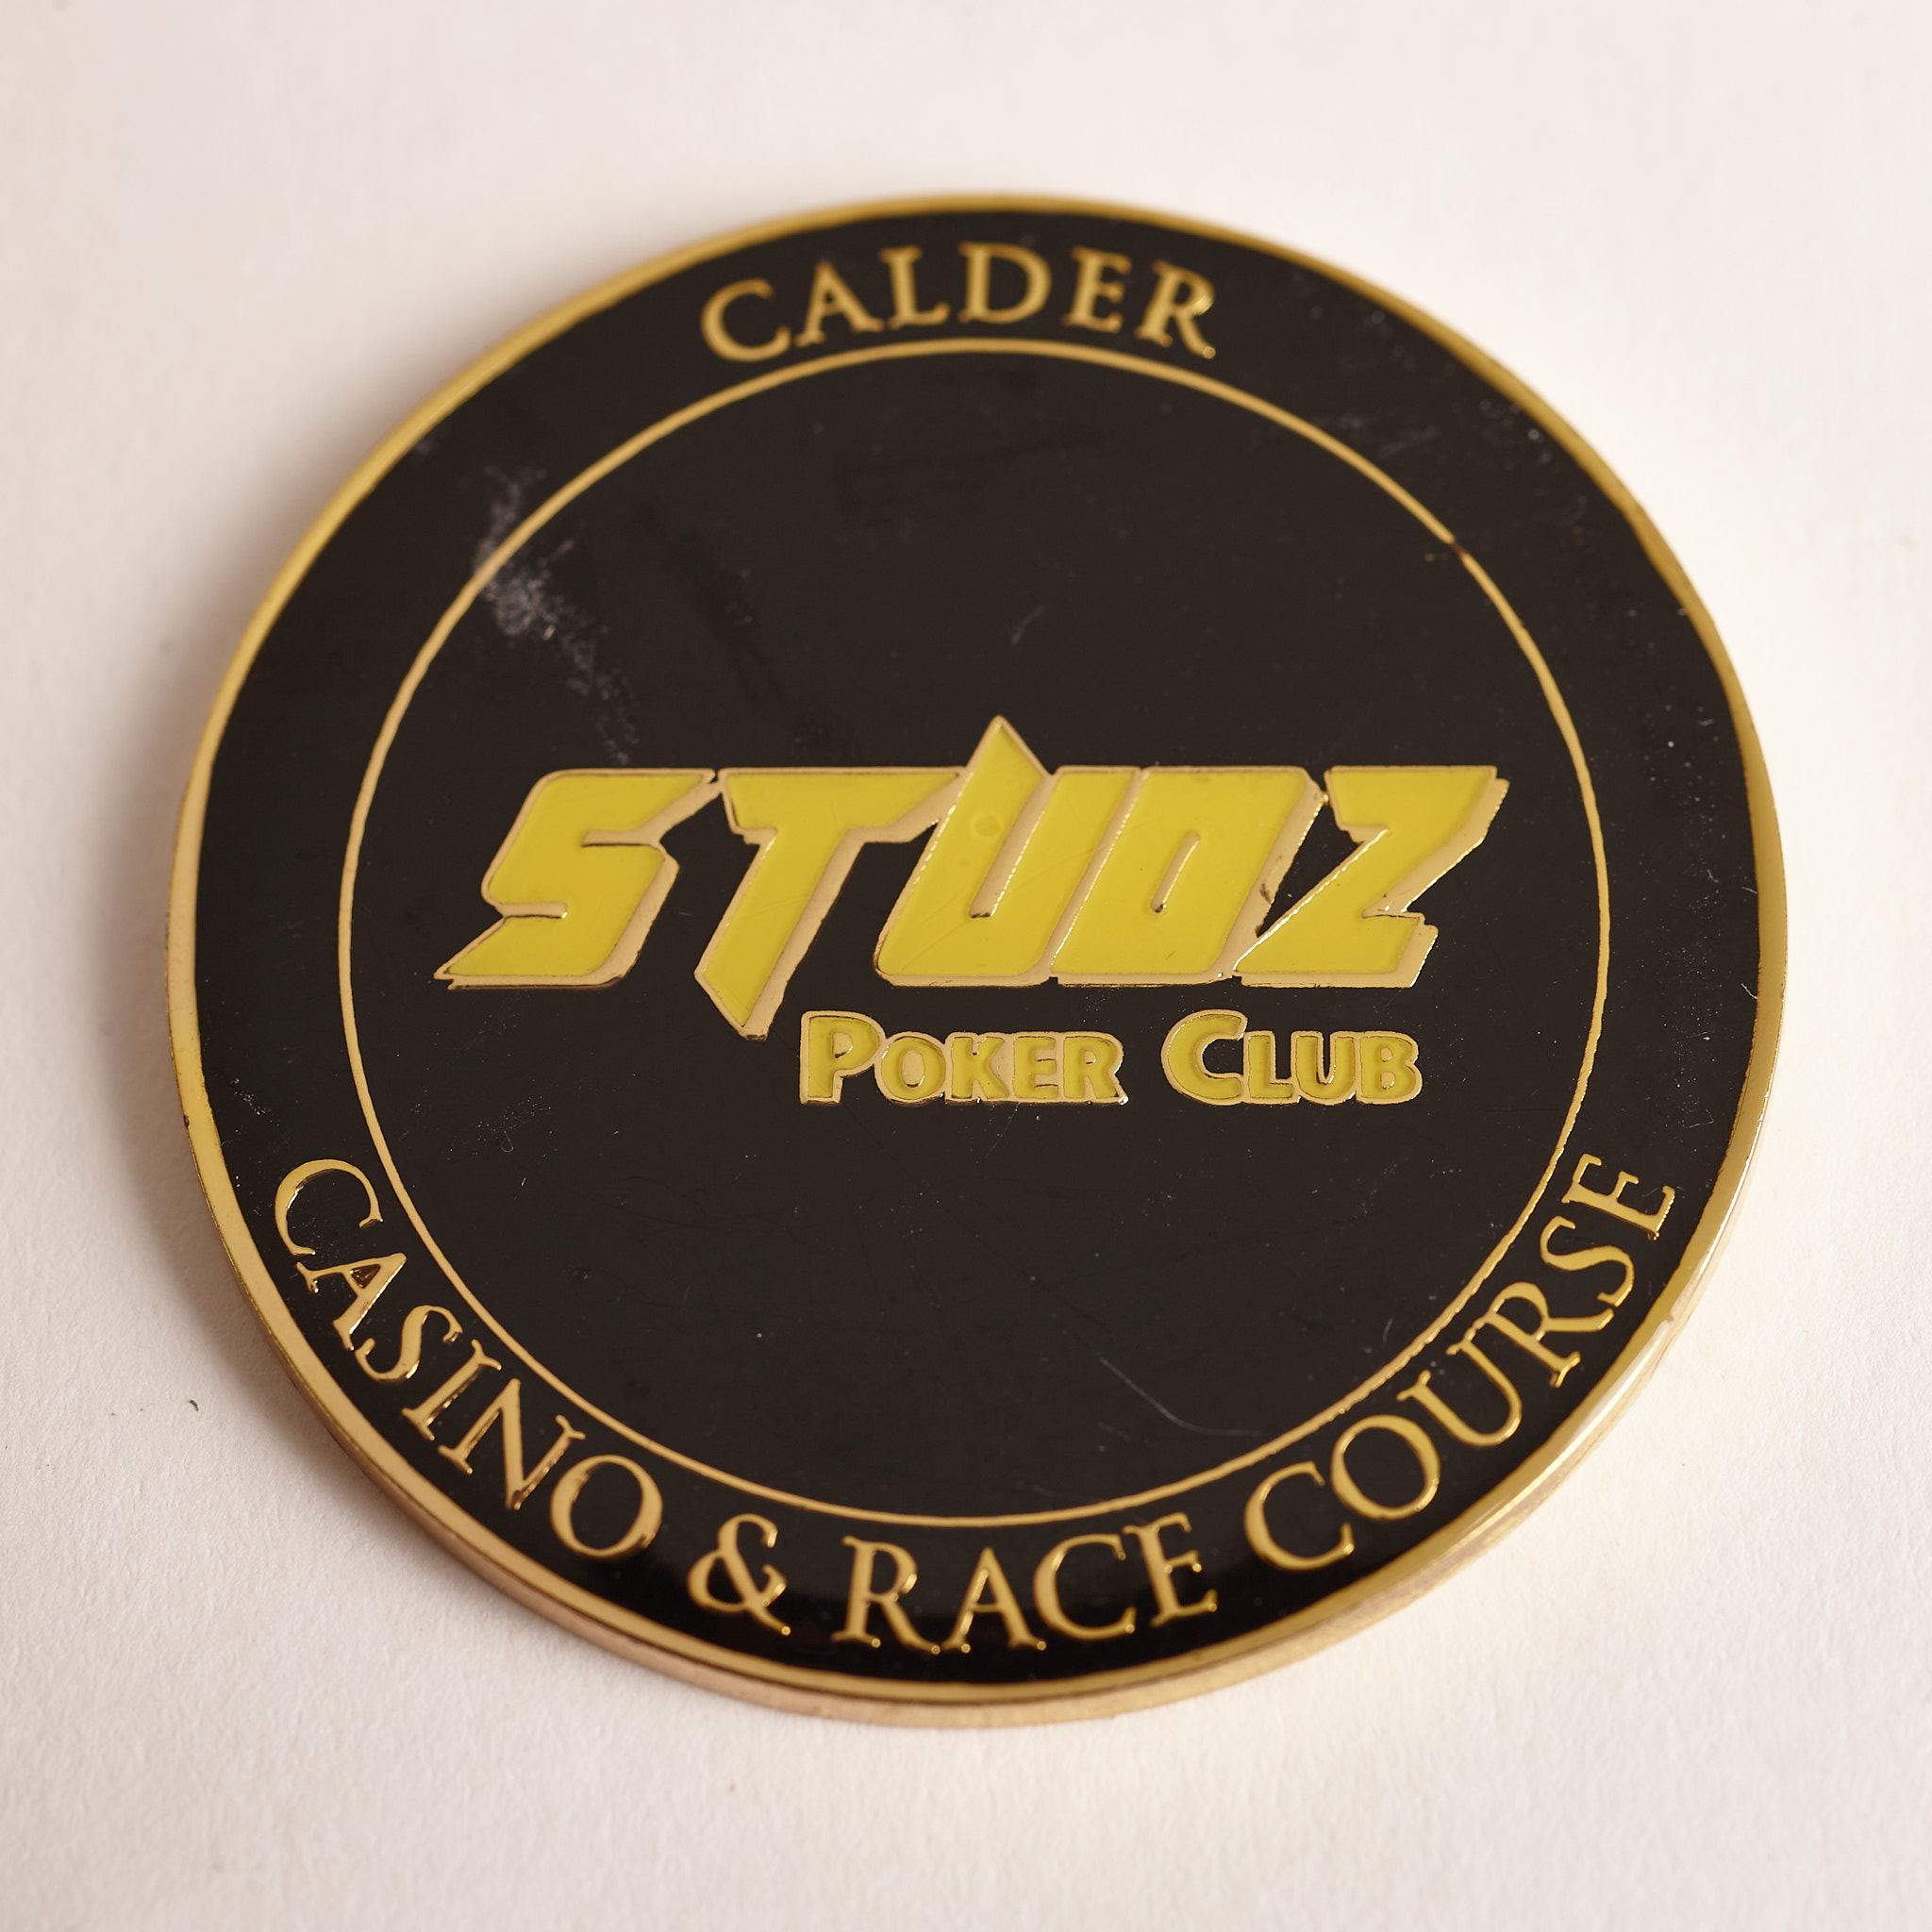 CALDER CASINO & RACECOURSE 2010, STUDZ POKER CLUB, Poker Card Guard